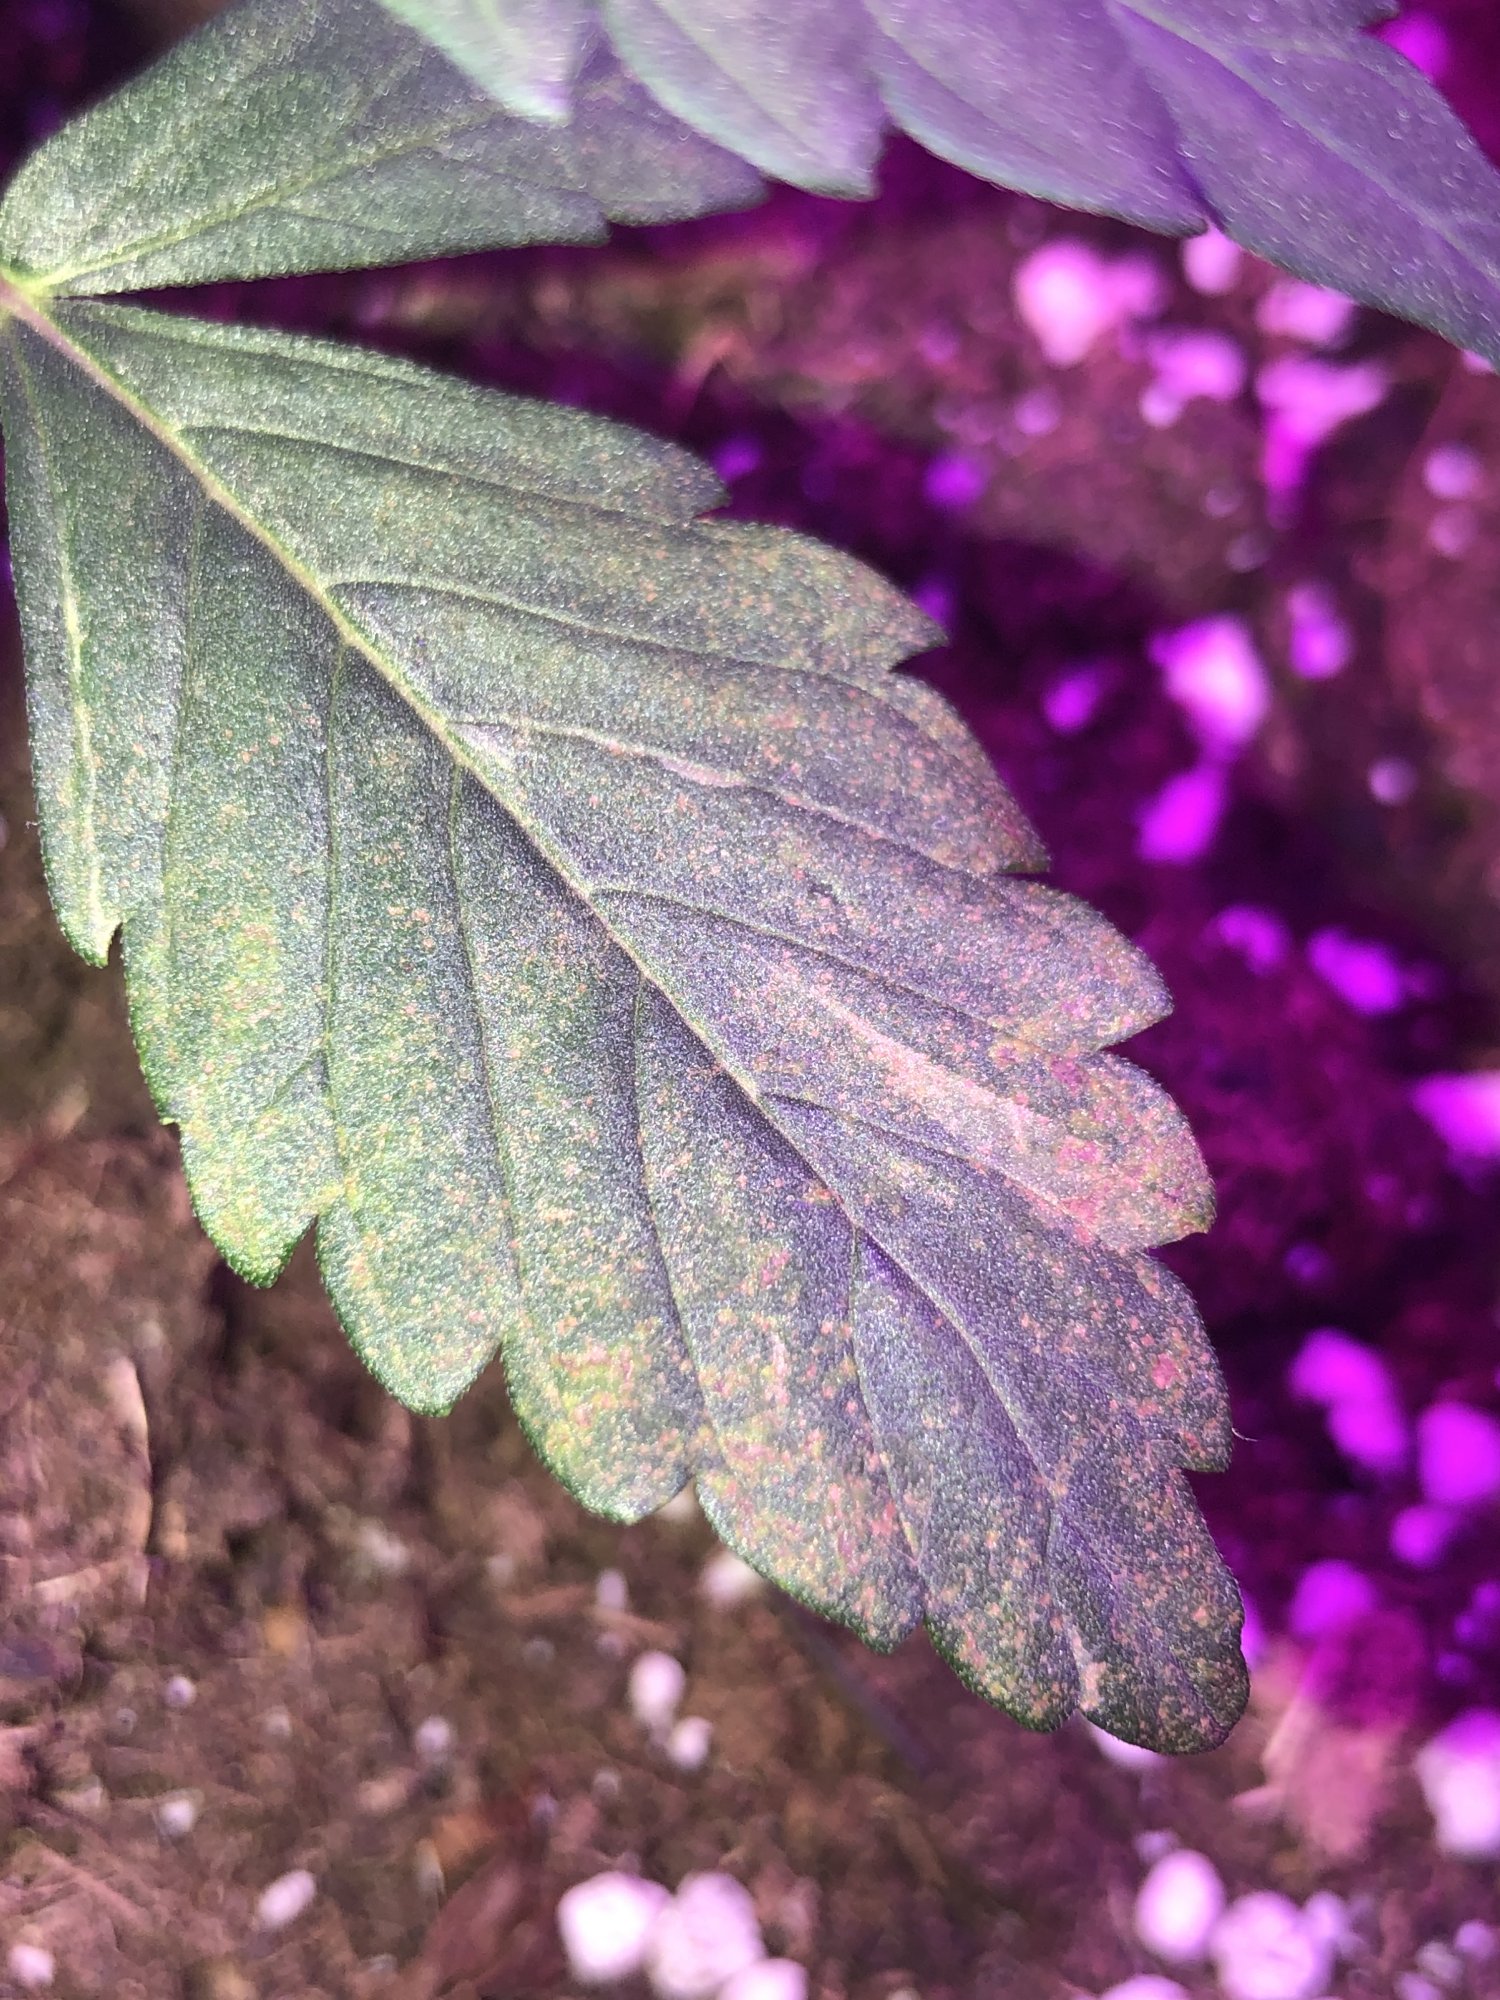 Leaf spots